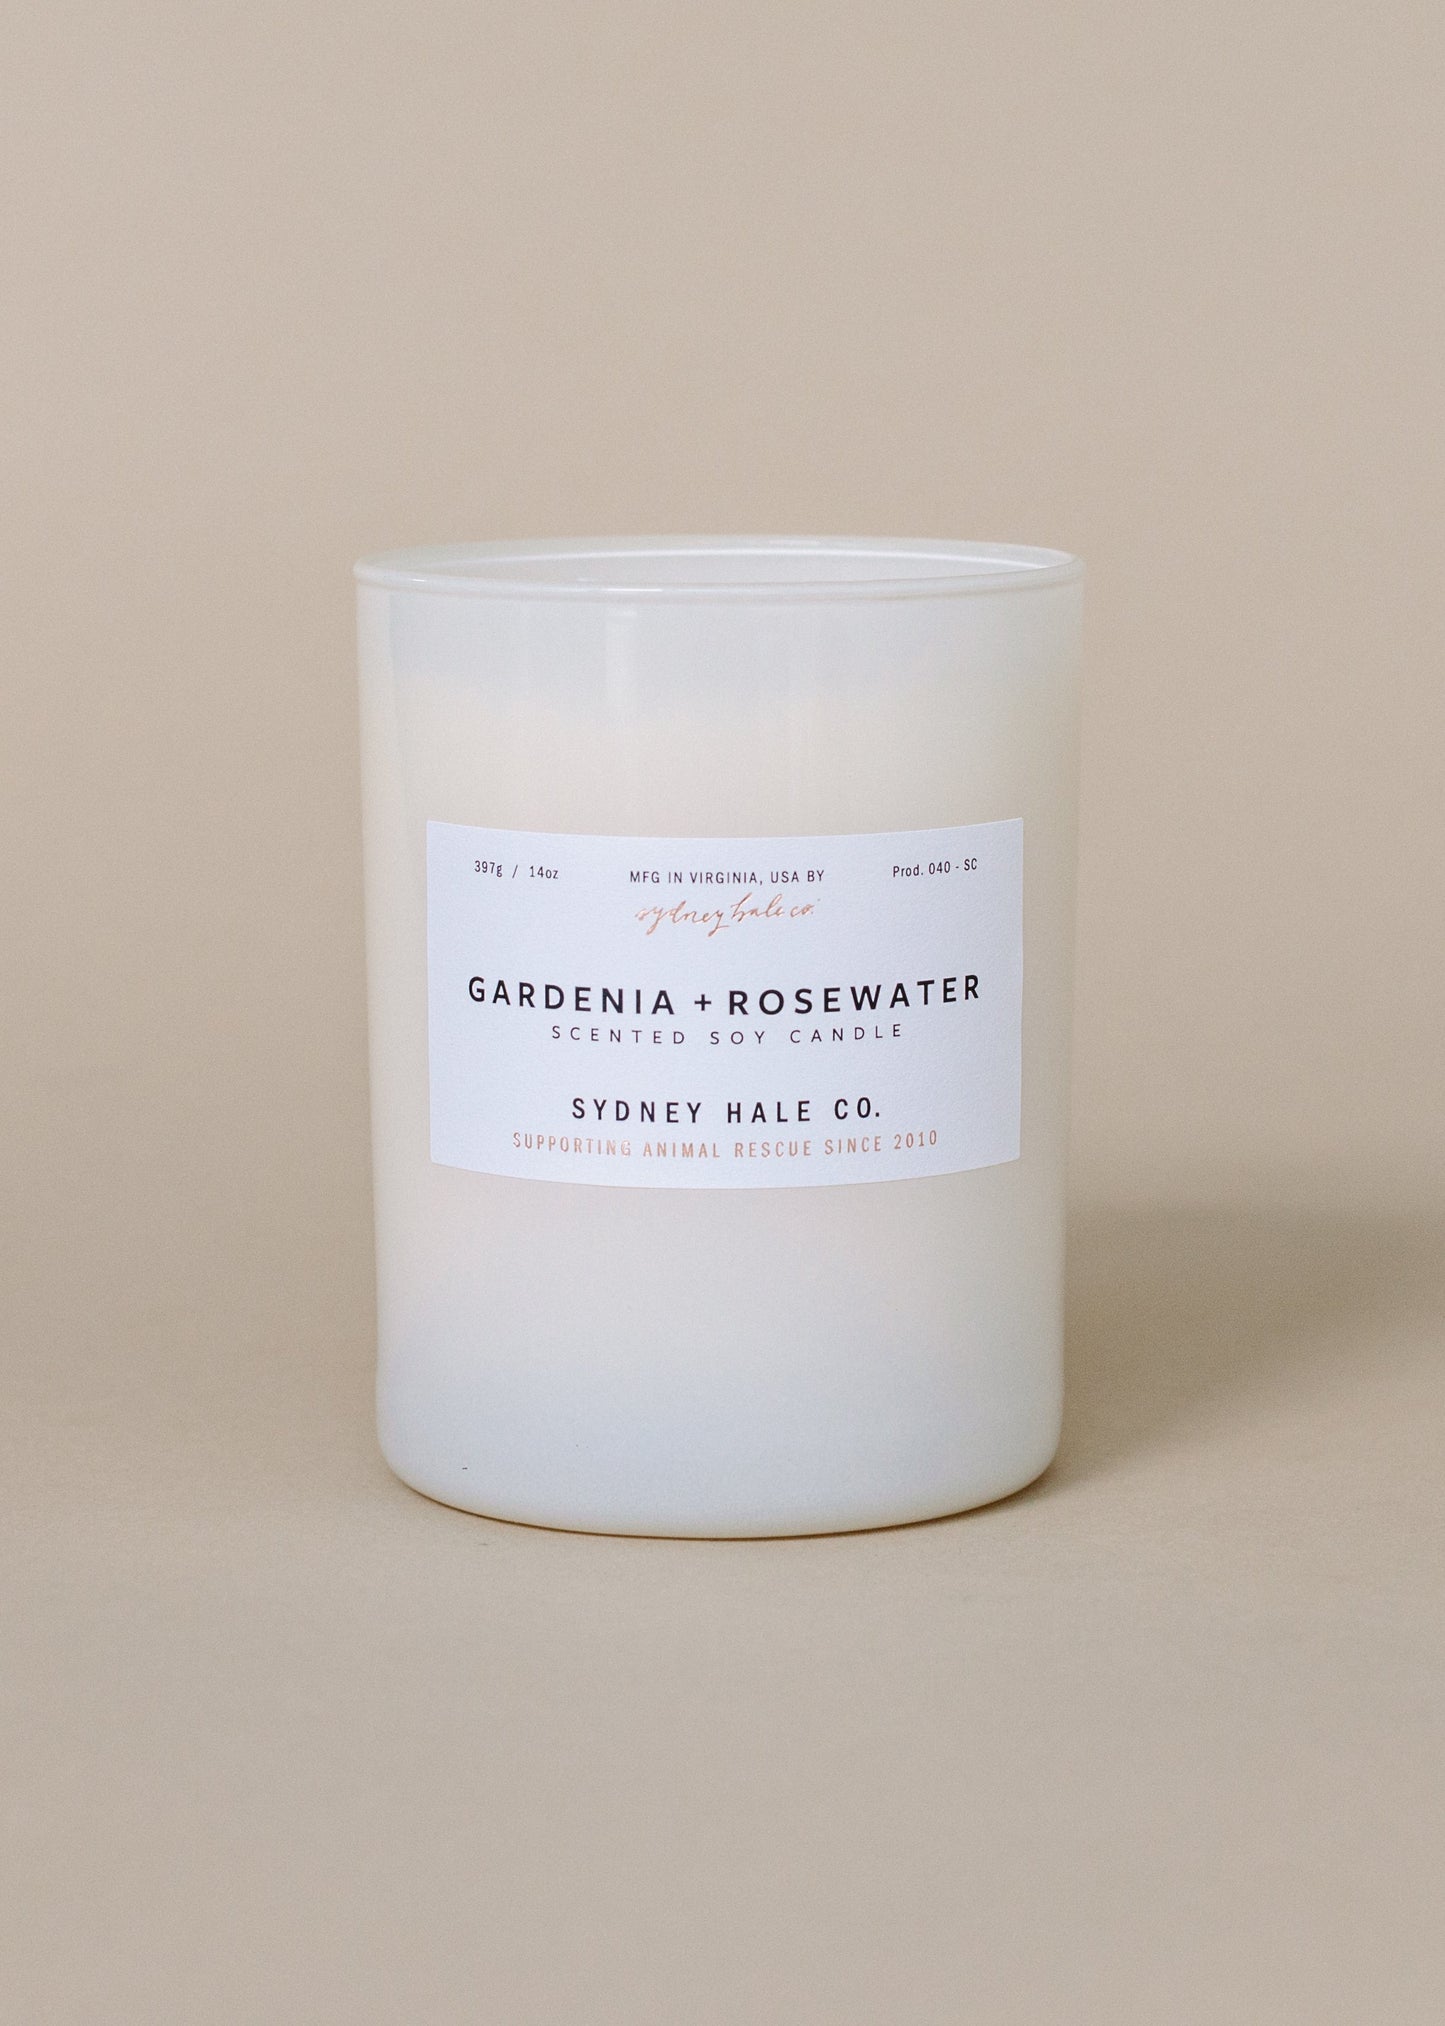 Gardenia + Rosewater – Sydney Hale Company